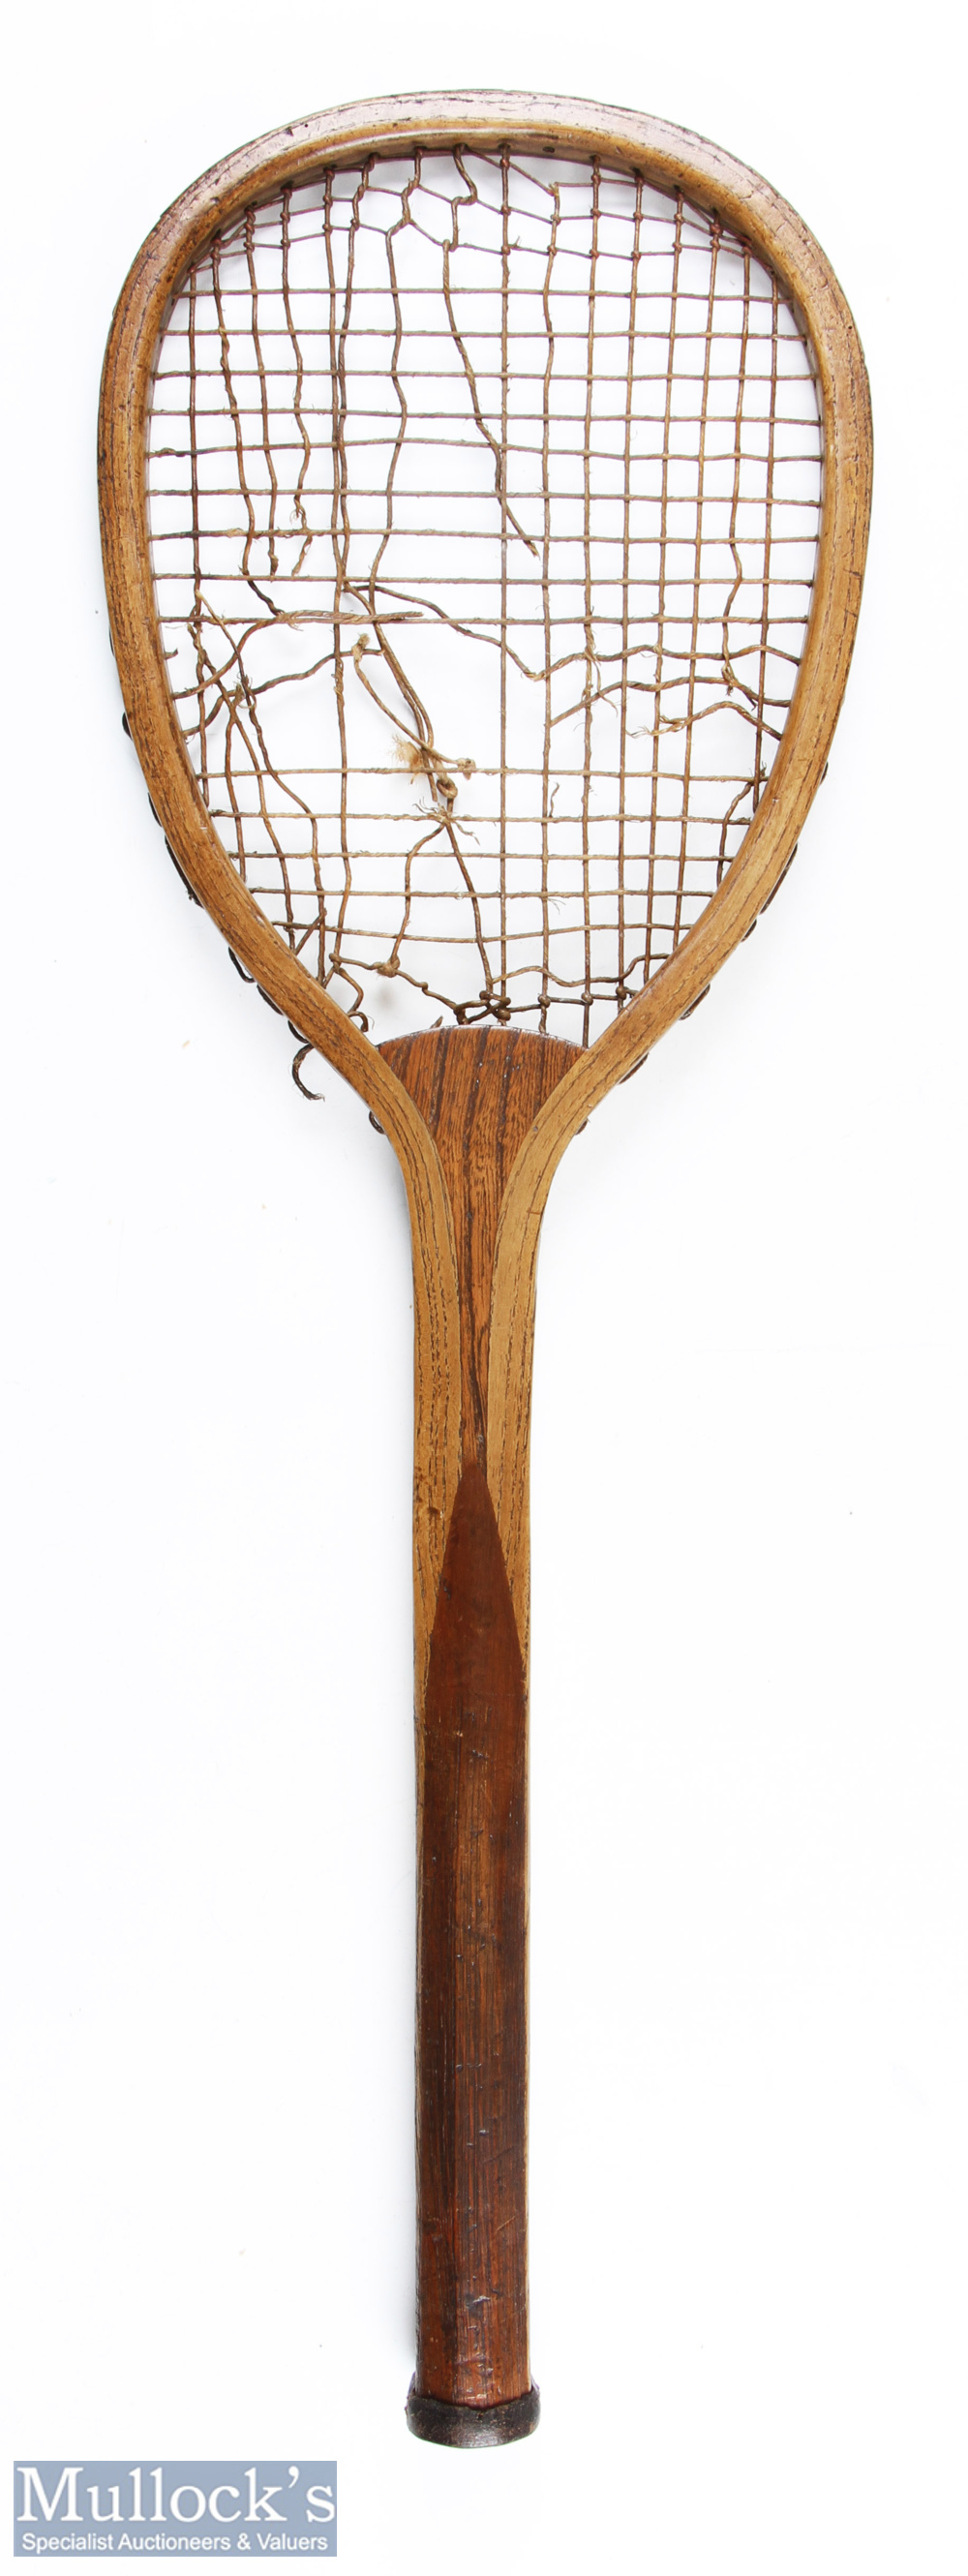 c1880 Semi Flat Top Wooden Tennis Racket, maker is unknown with convex wedge broken gut strings,